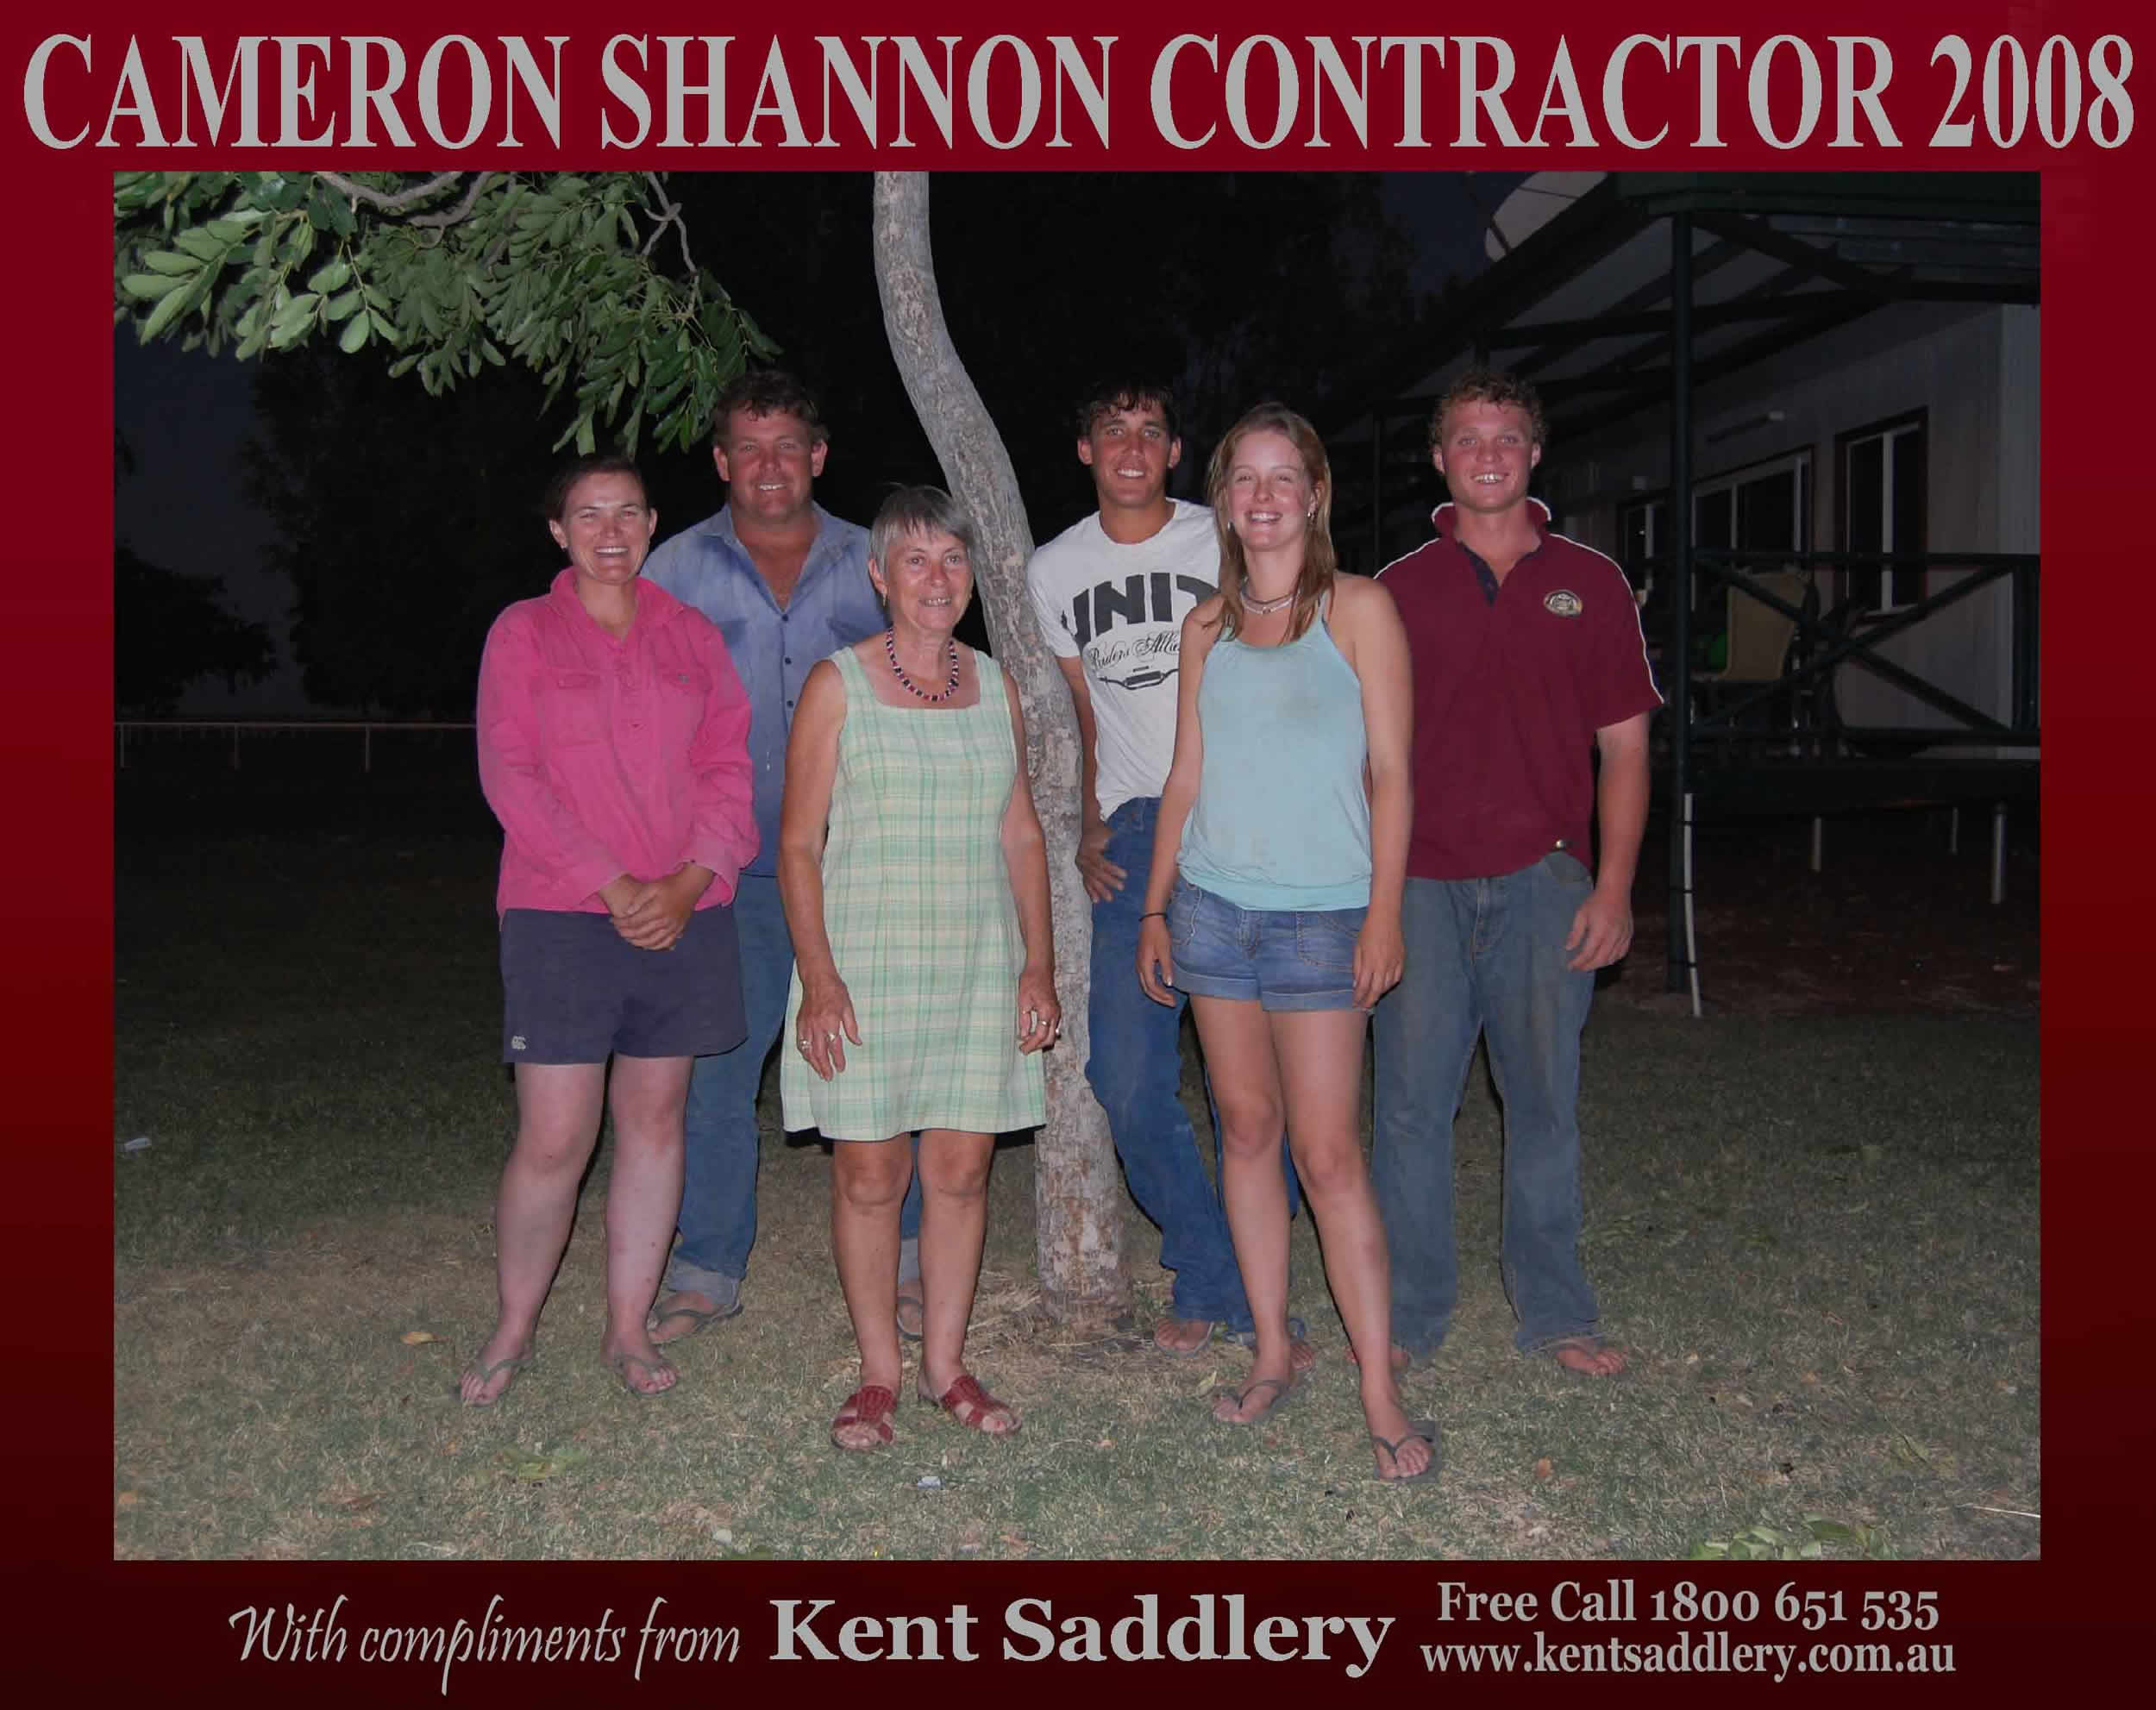 Drovers & Contractors - Cameron Shannon Contractor 2